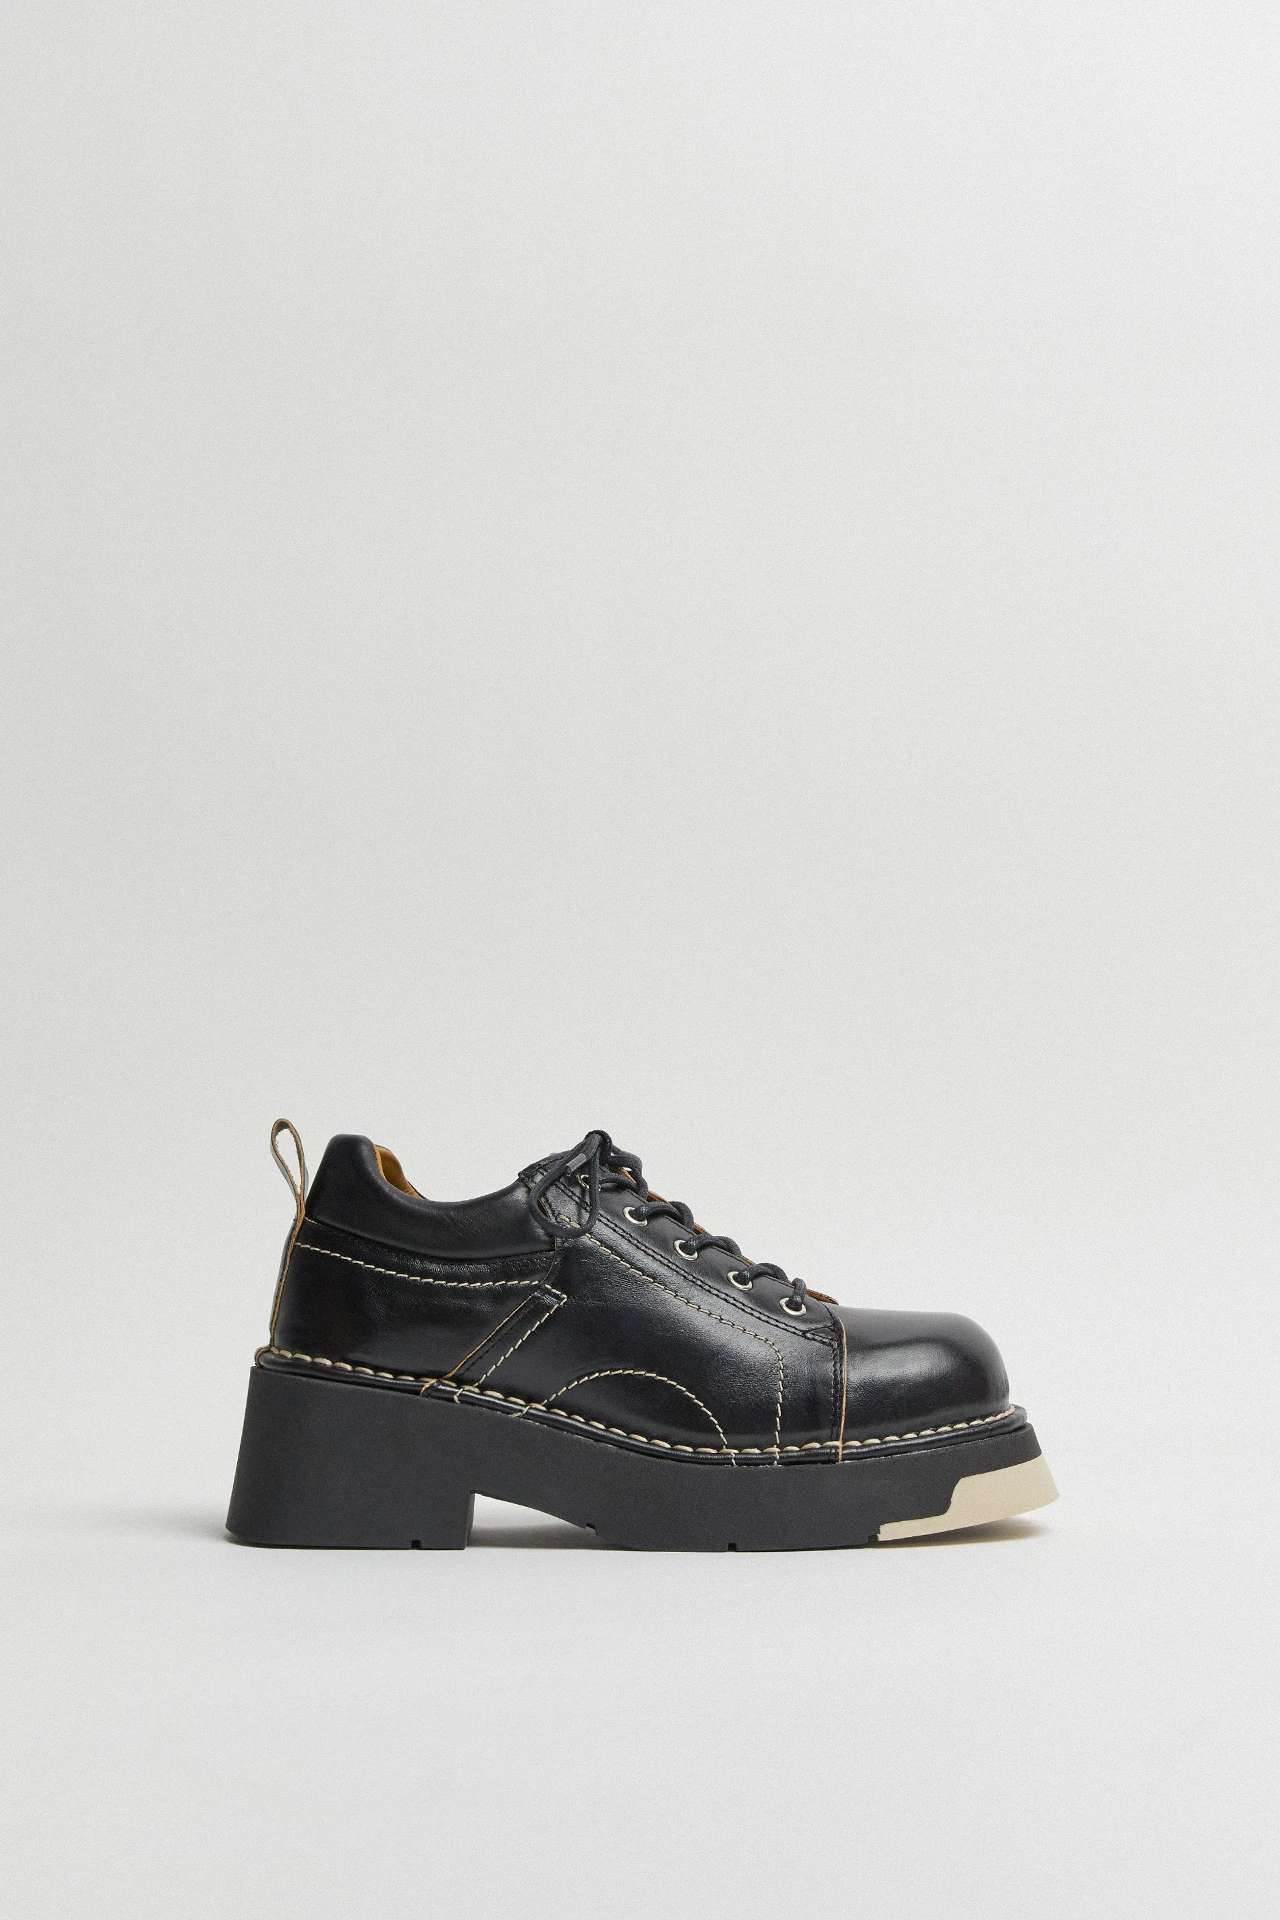 Miista-erina-black-ankle-boots-01